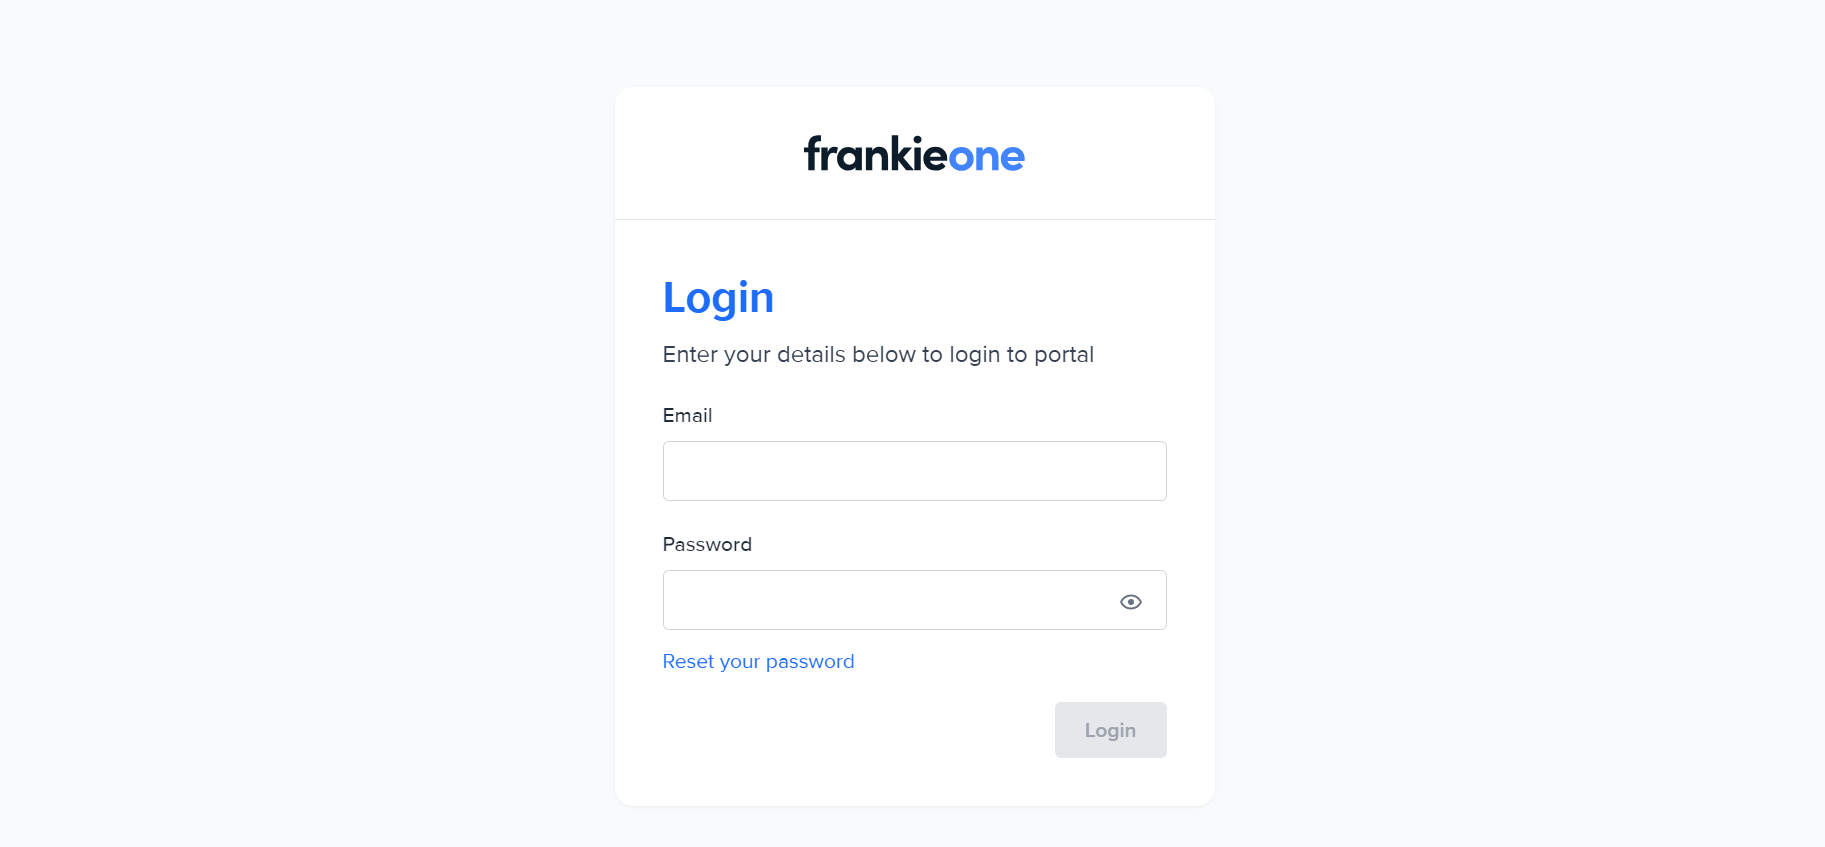 FrankieOne Portal login page.